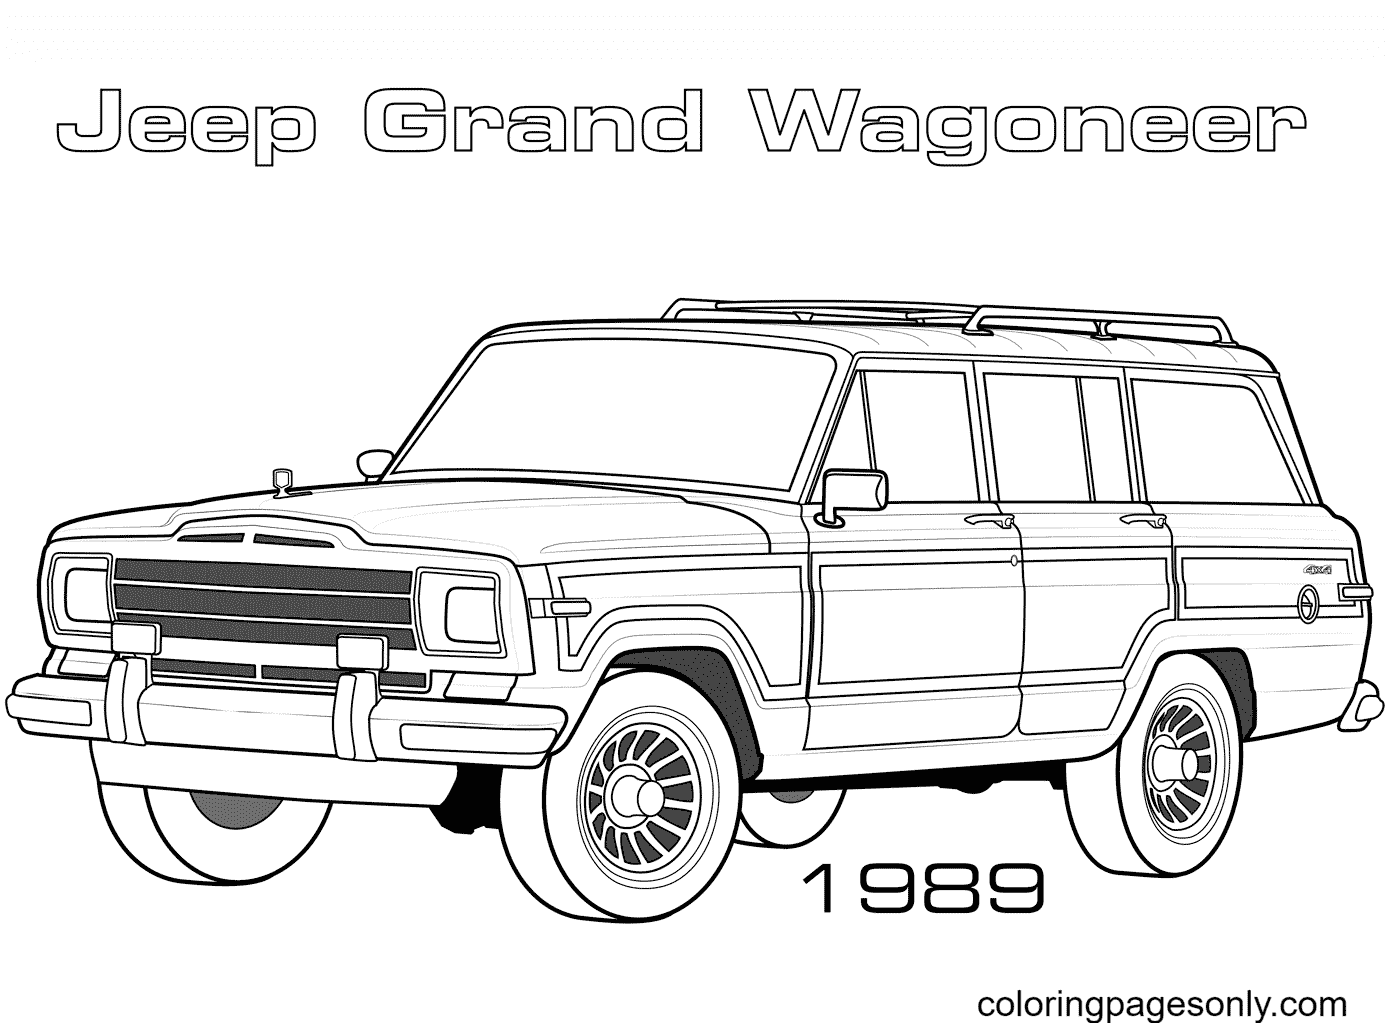 1989 Jeep Grand Wagoneer de Jeep